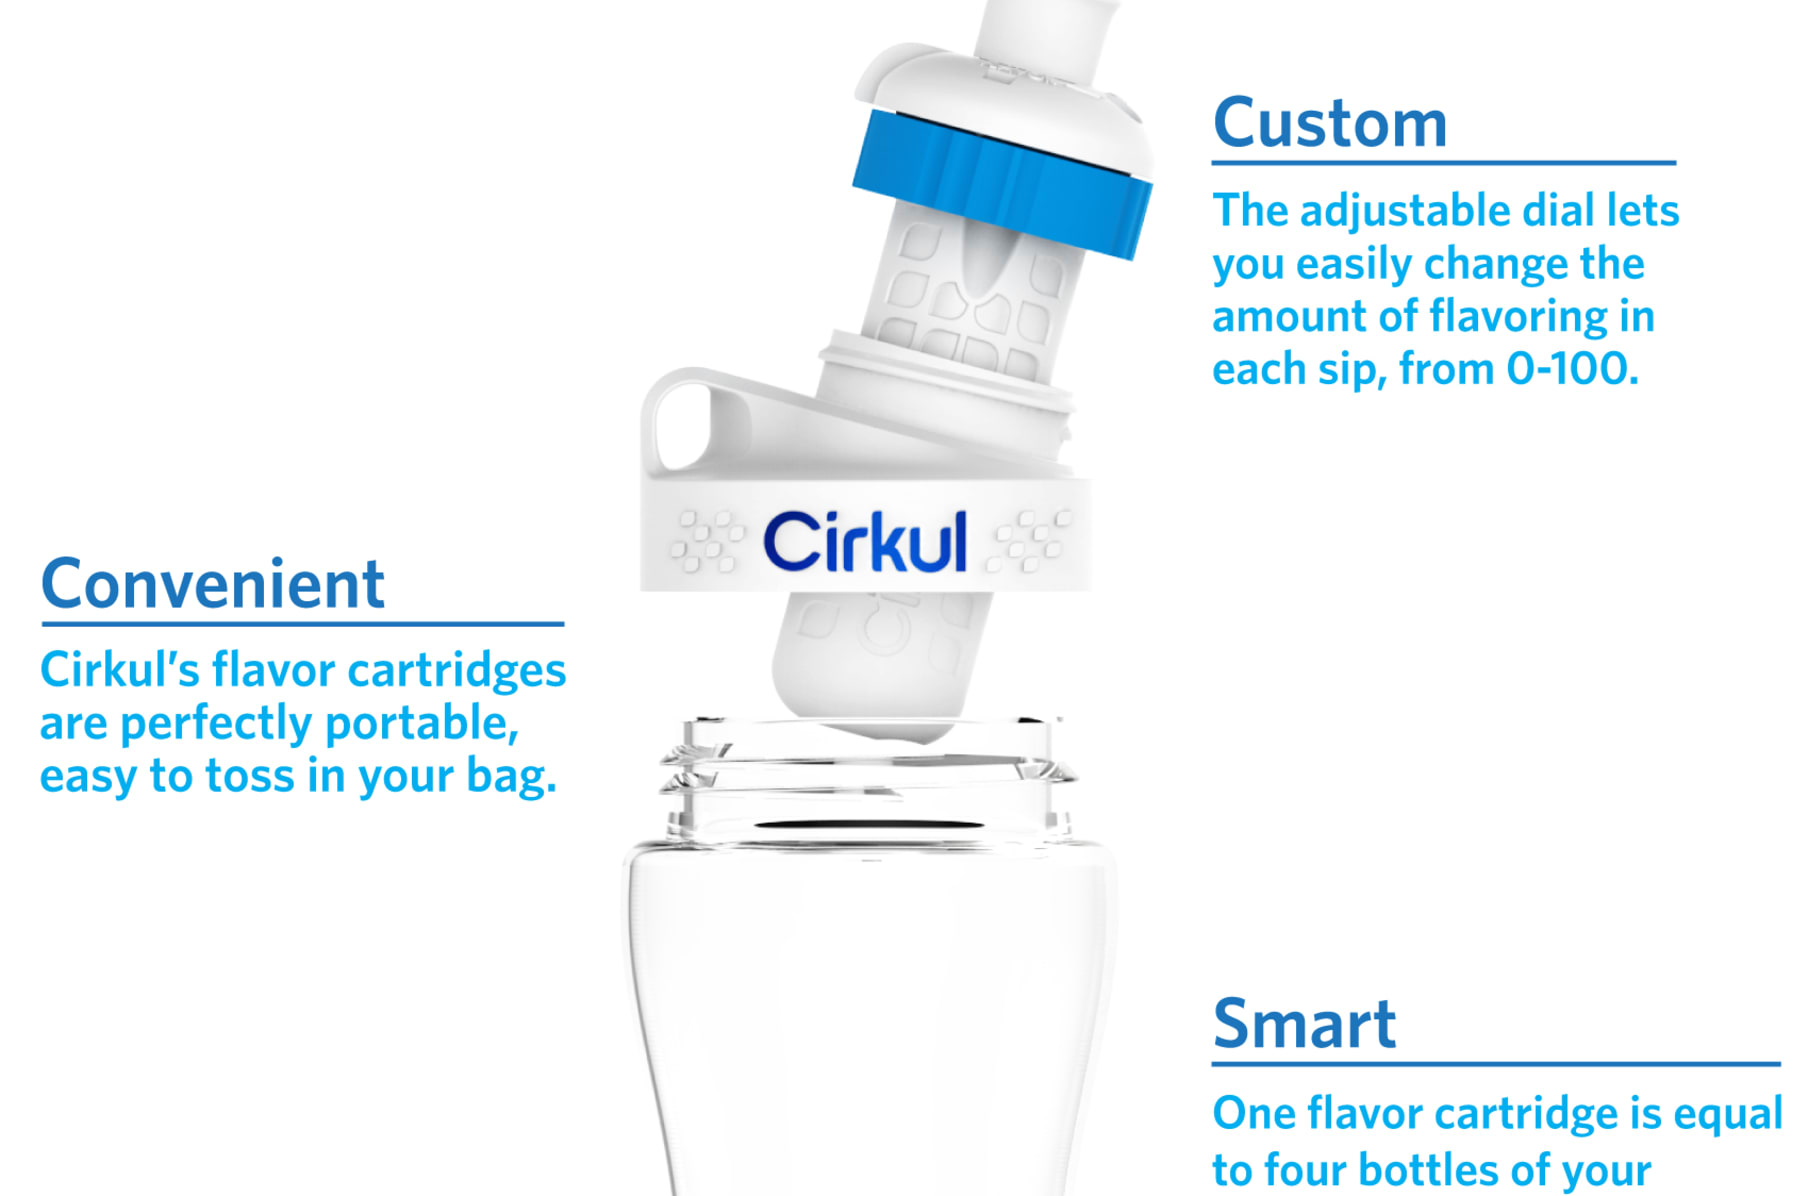 Cirkul: Transform Your Water